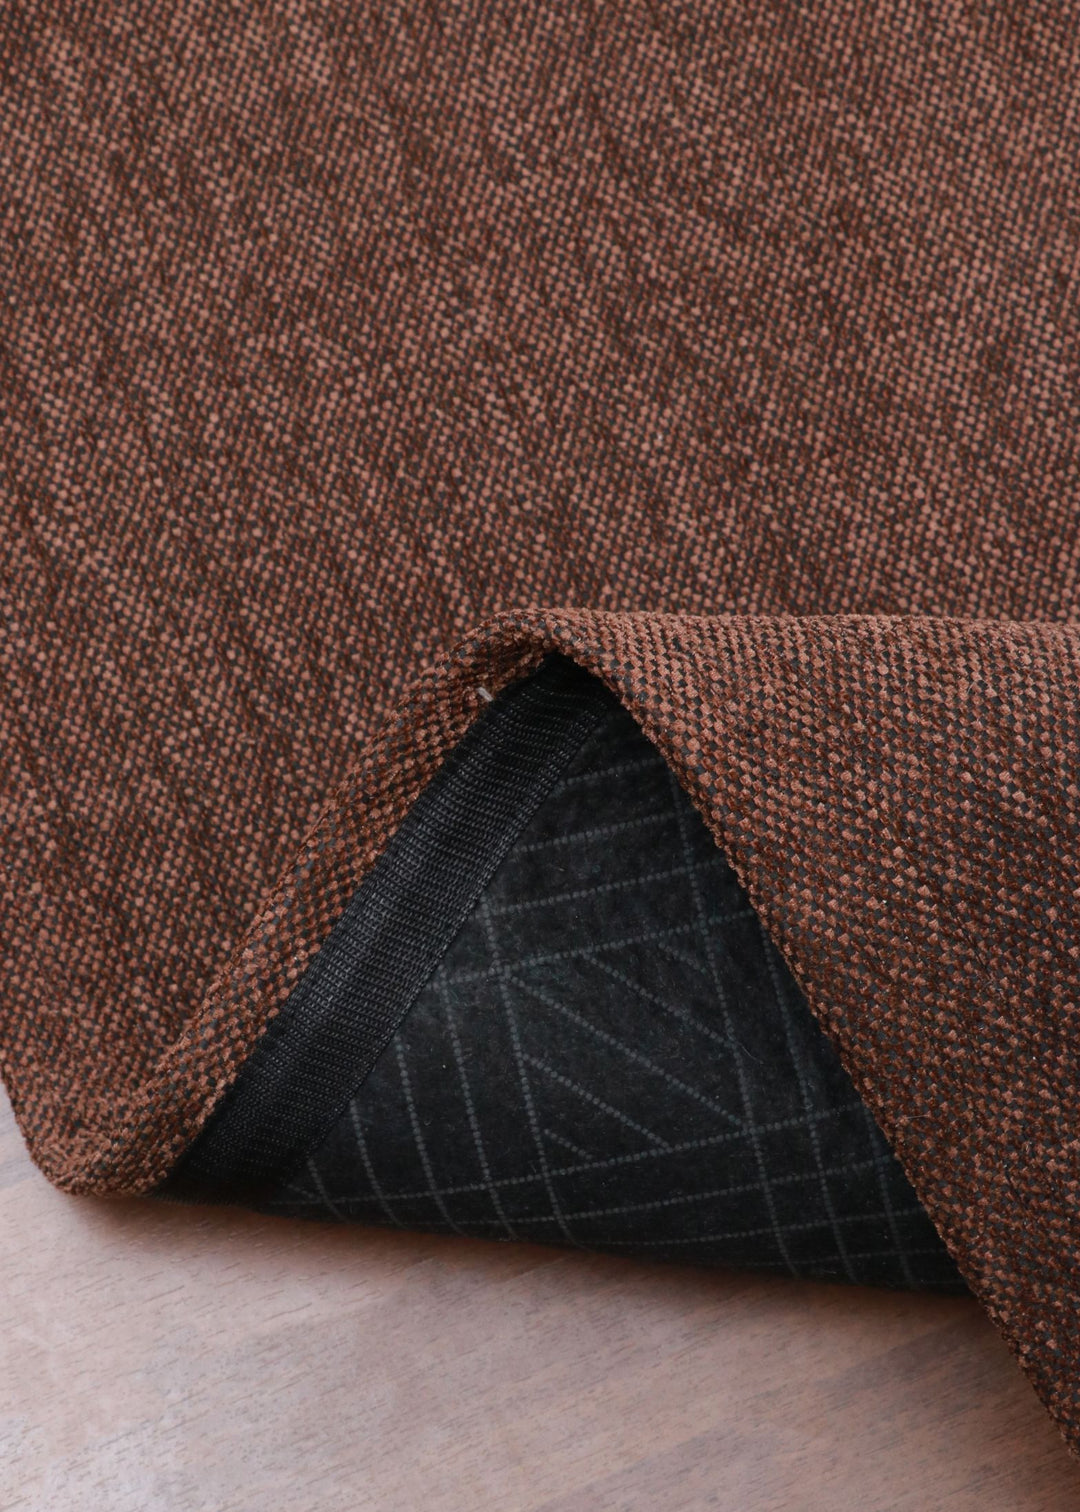 Dark Brown & Black Woven Fabric Rug - Indoor Use